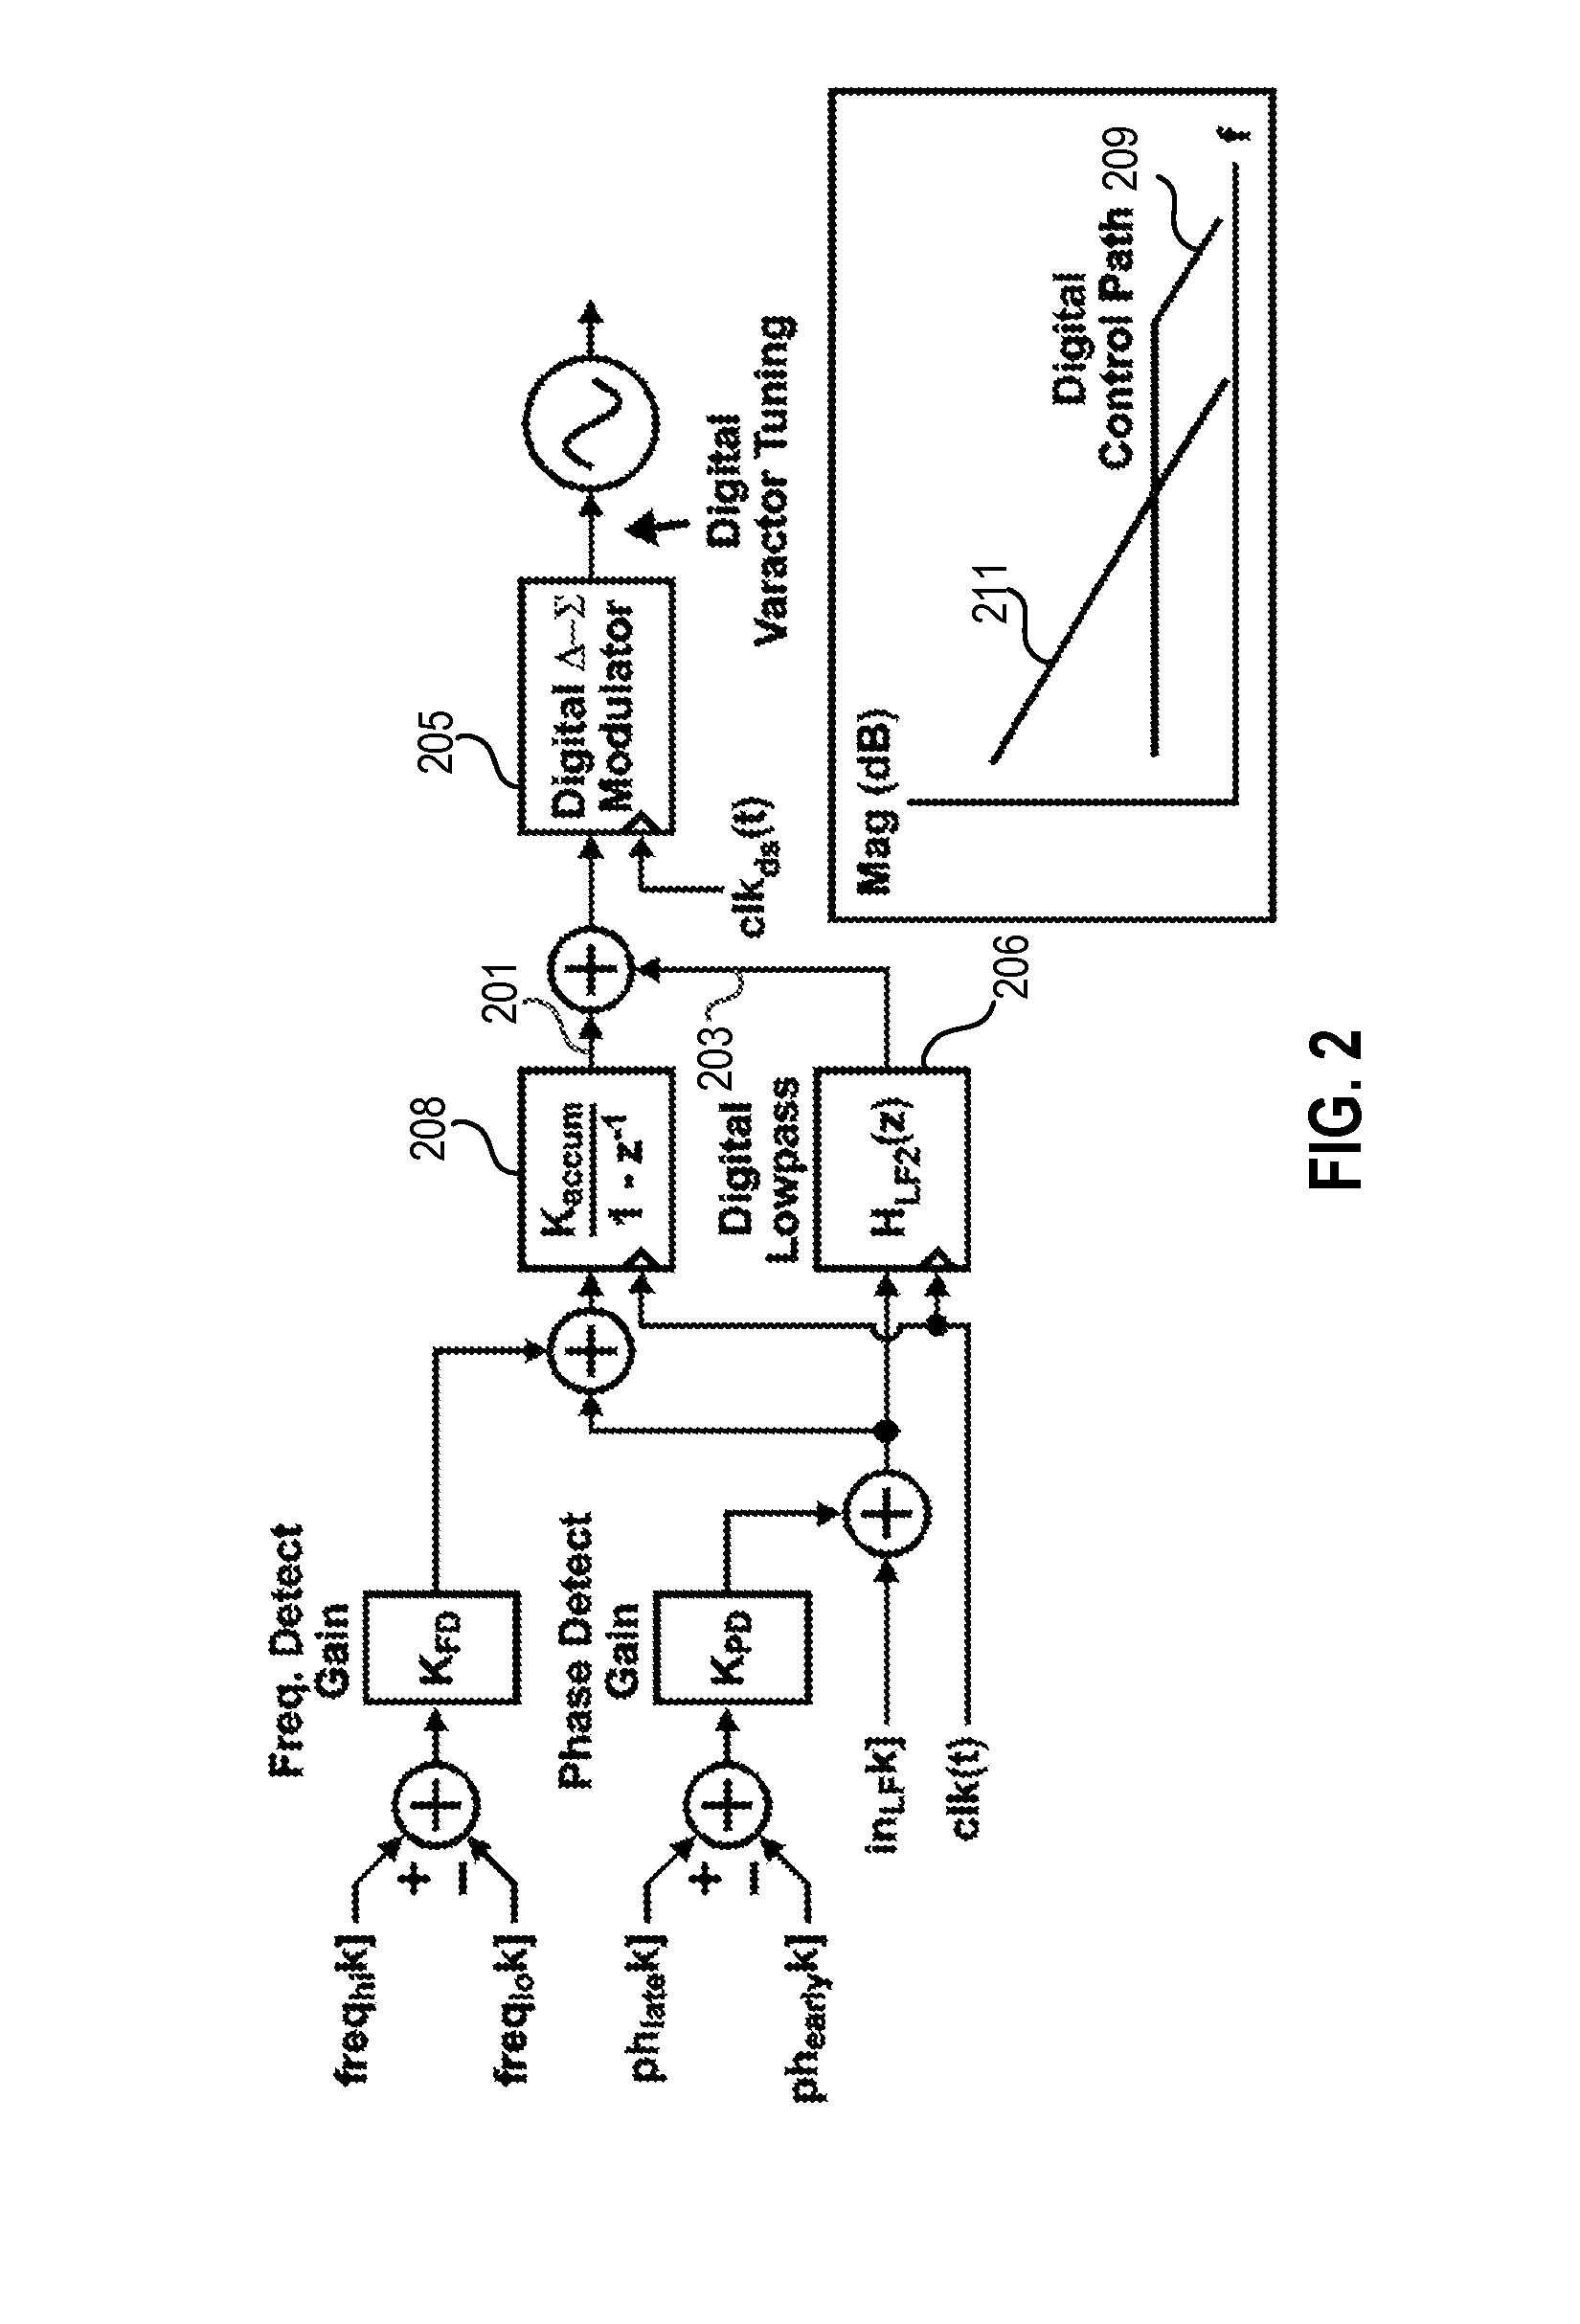 Hybrid analog and digital control of oscillator frequency